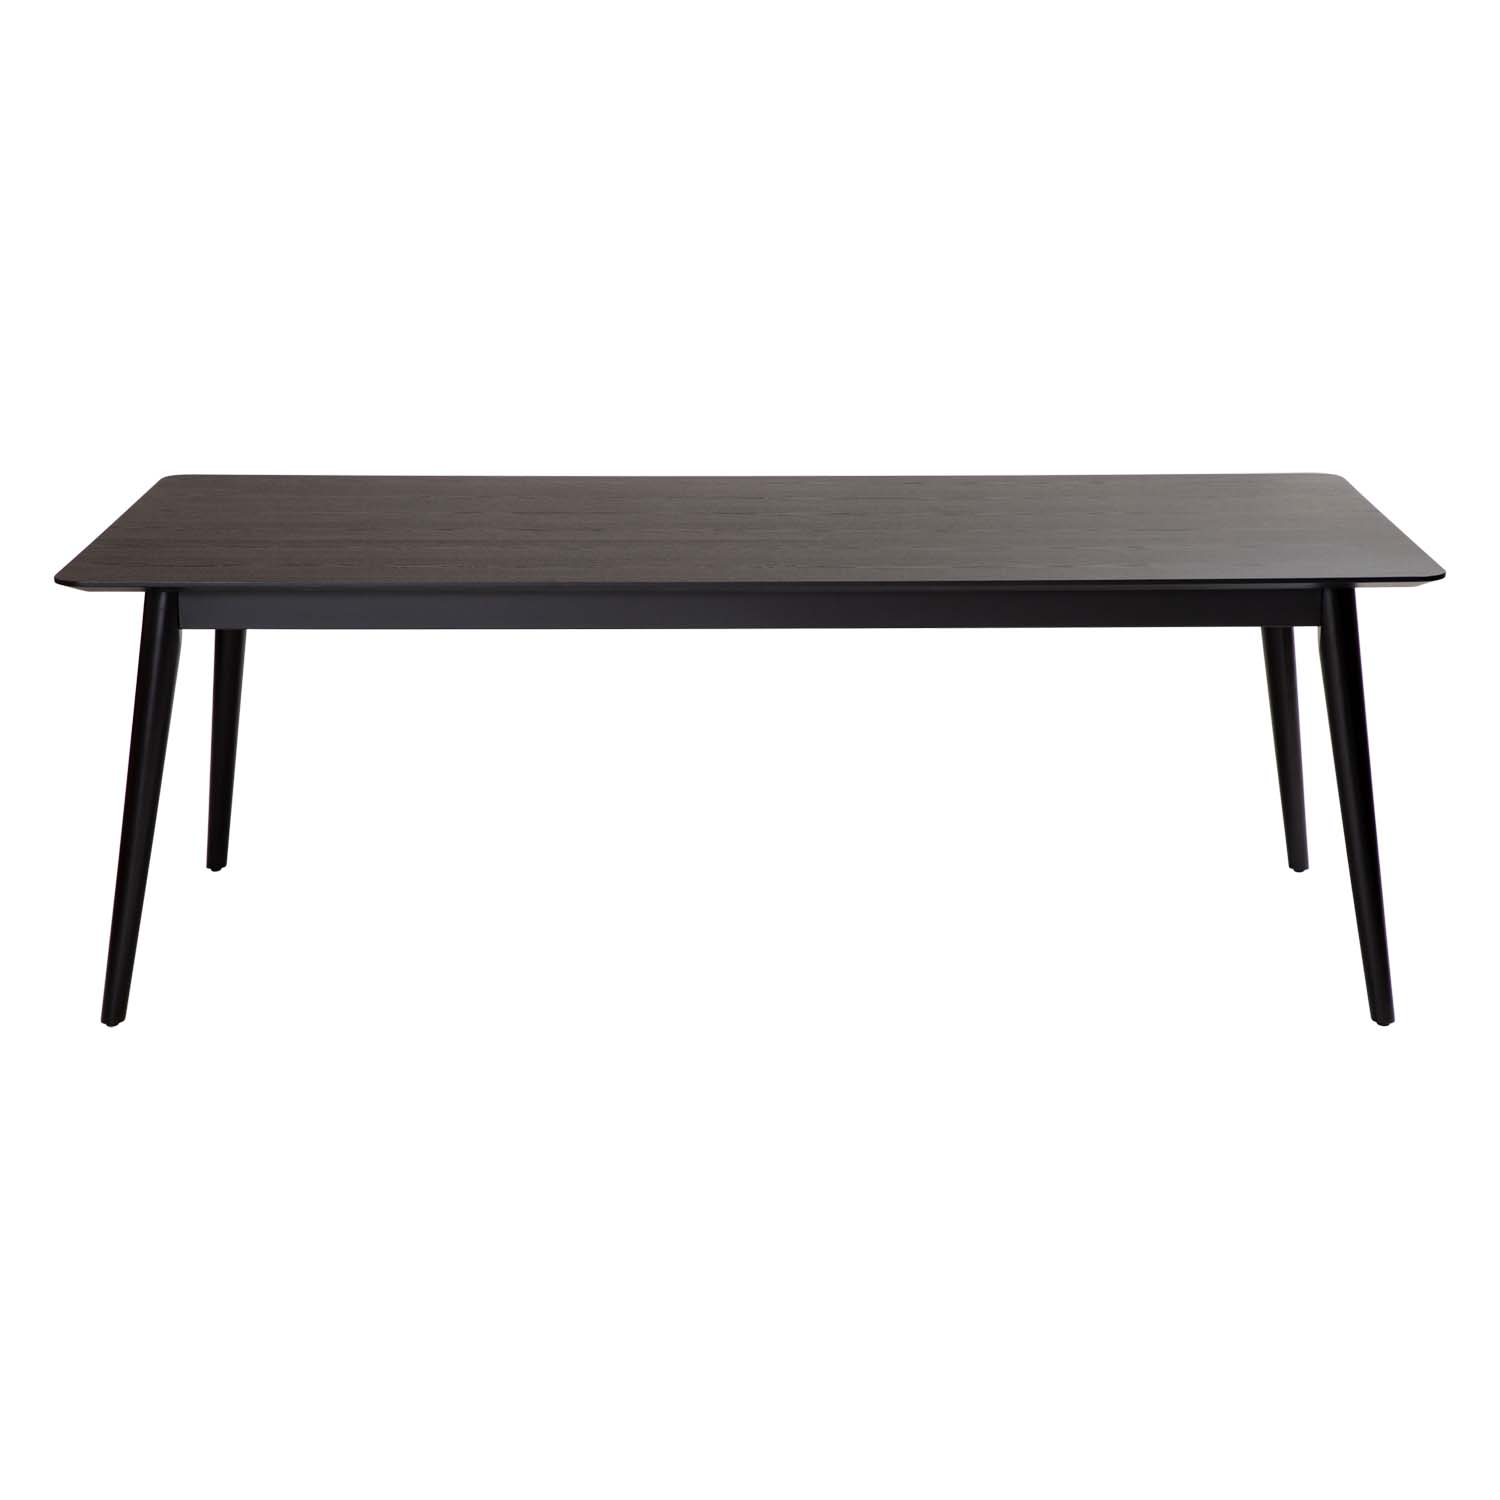 8: DAN-FORM Yolo spisebord, rektangulær - sort askefinér og sort træ (100x220)